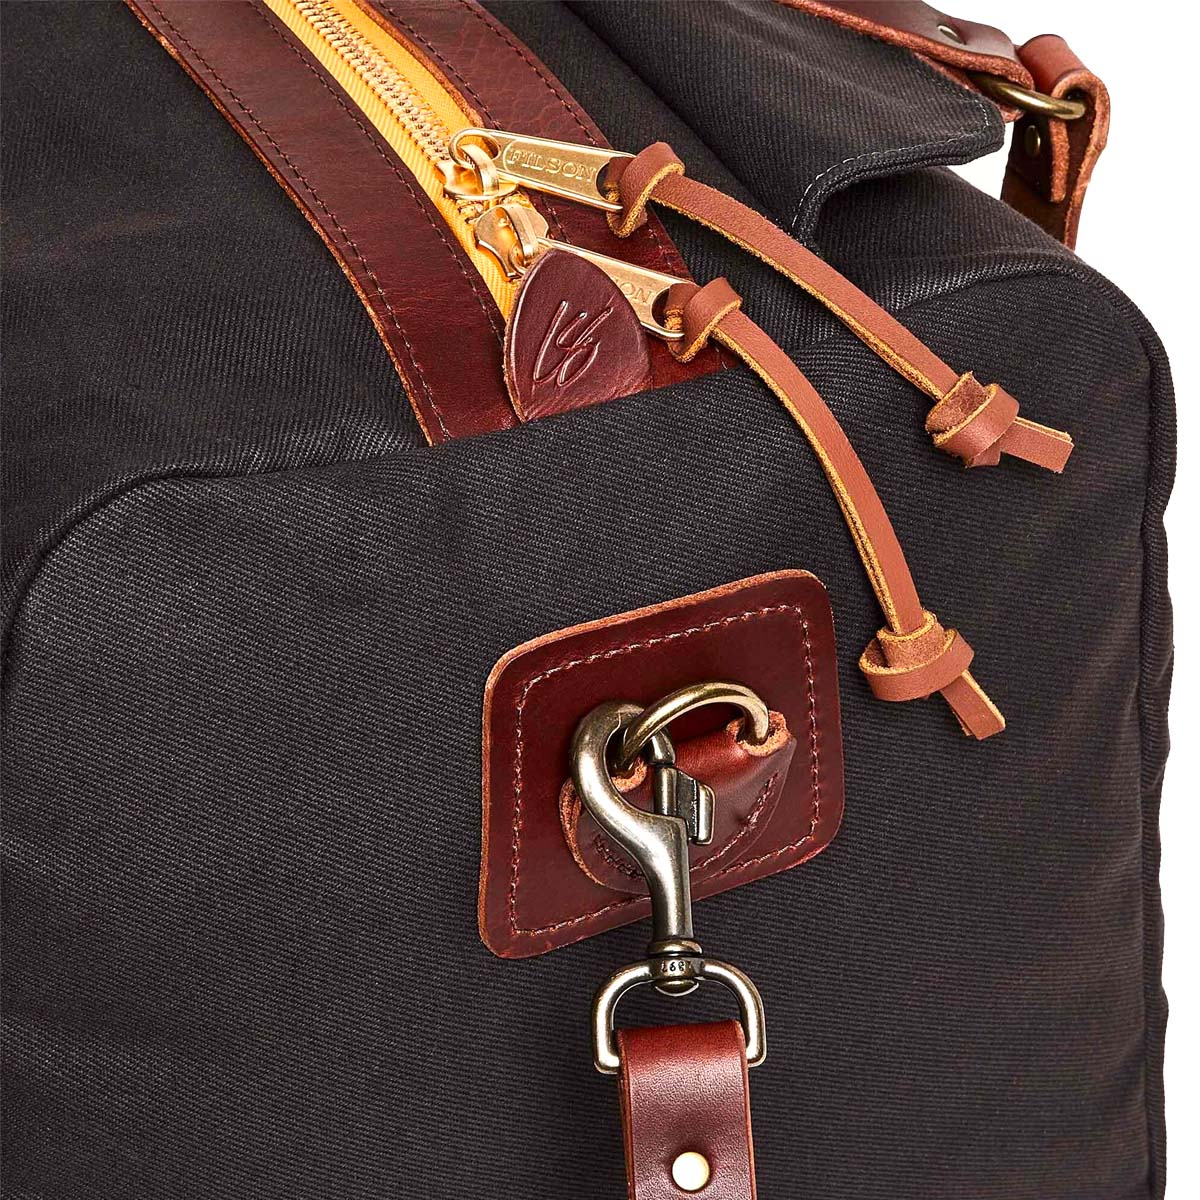 Filson Traveller Medium Duffle Bag Stapleton Cinder, colors for the fabric, zipper, and leather chosen by Chris Stapleton